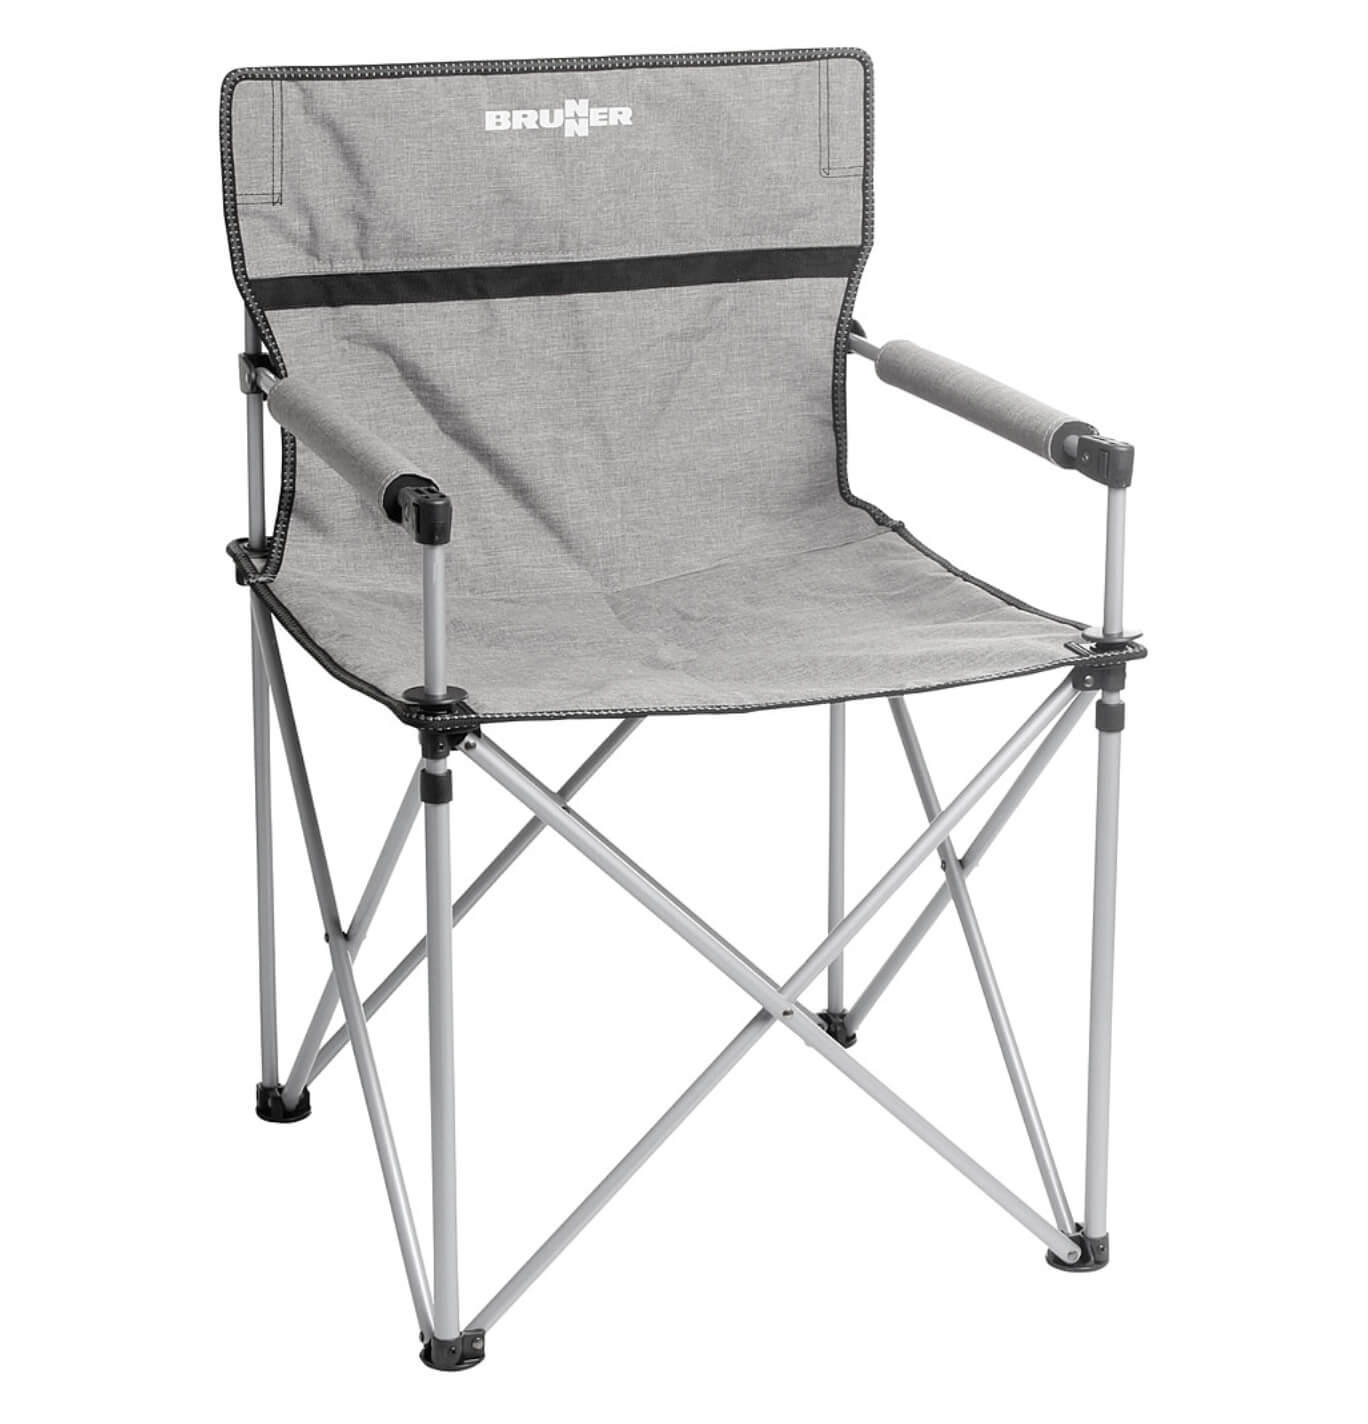 Brunner Director's Demtex Folding Outdoor Camping Chair